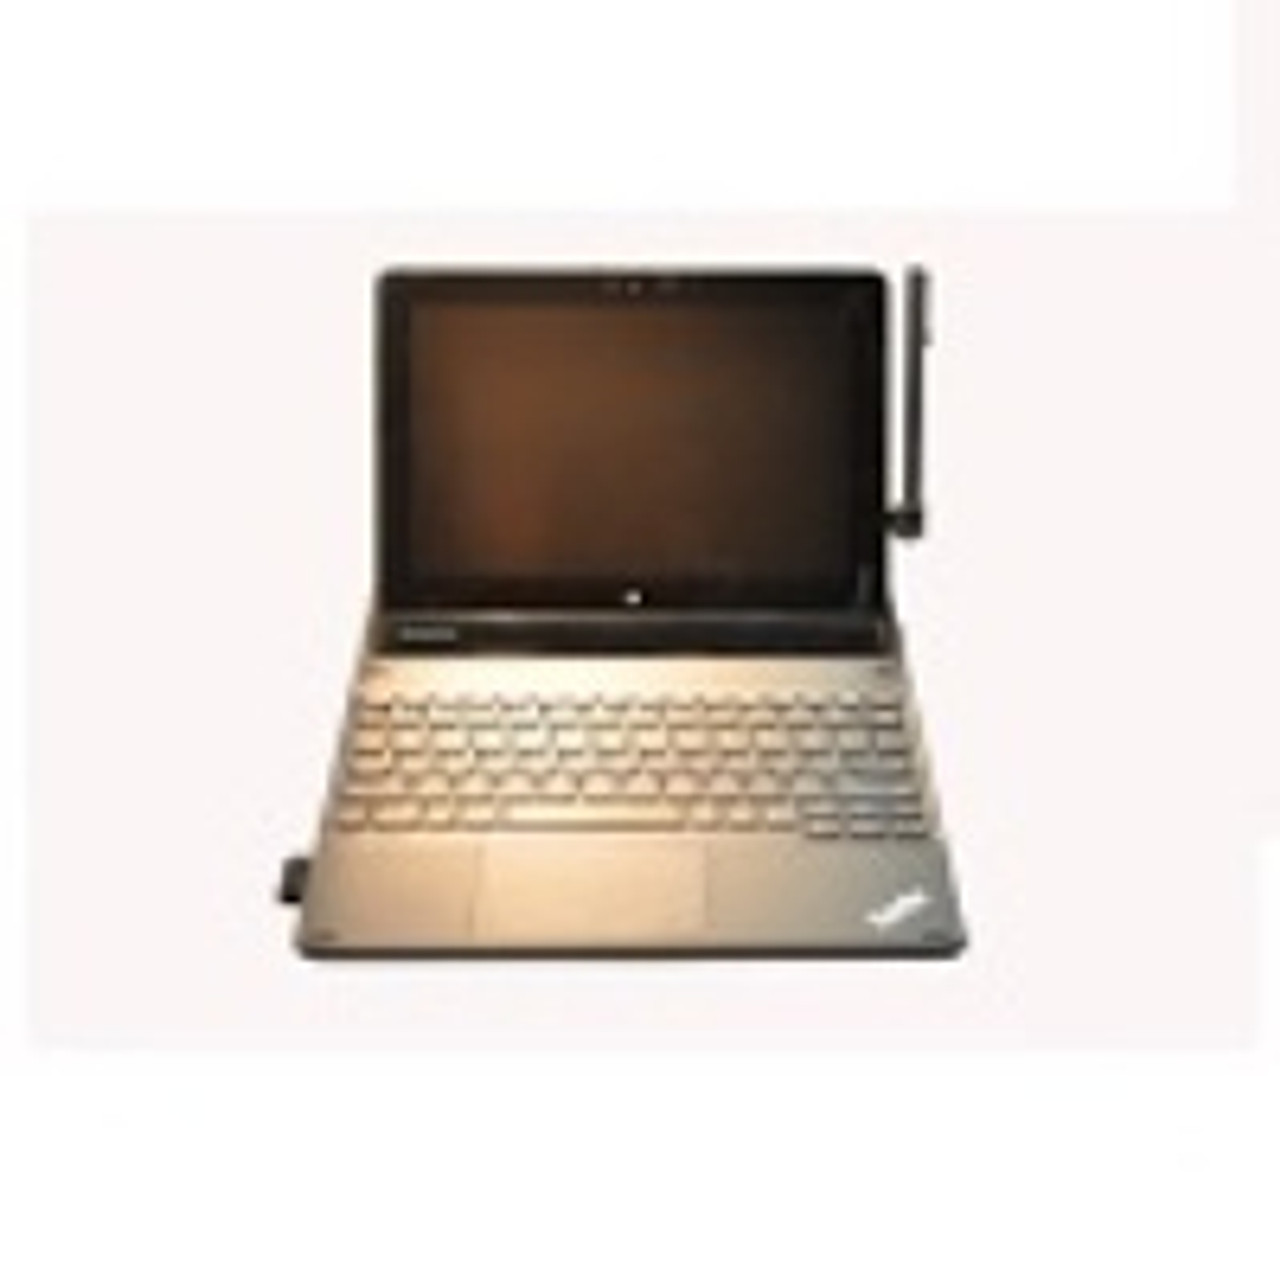 4X30J32075 | Lenovo | ThinkPad 10 Folio Keyboard Portuguese mobile device keyboard USB